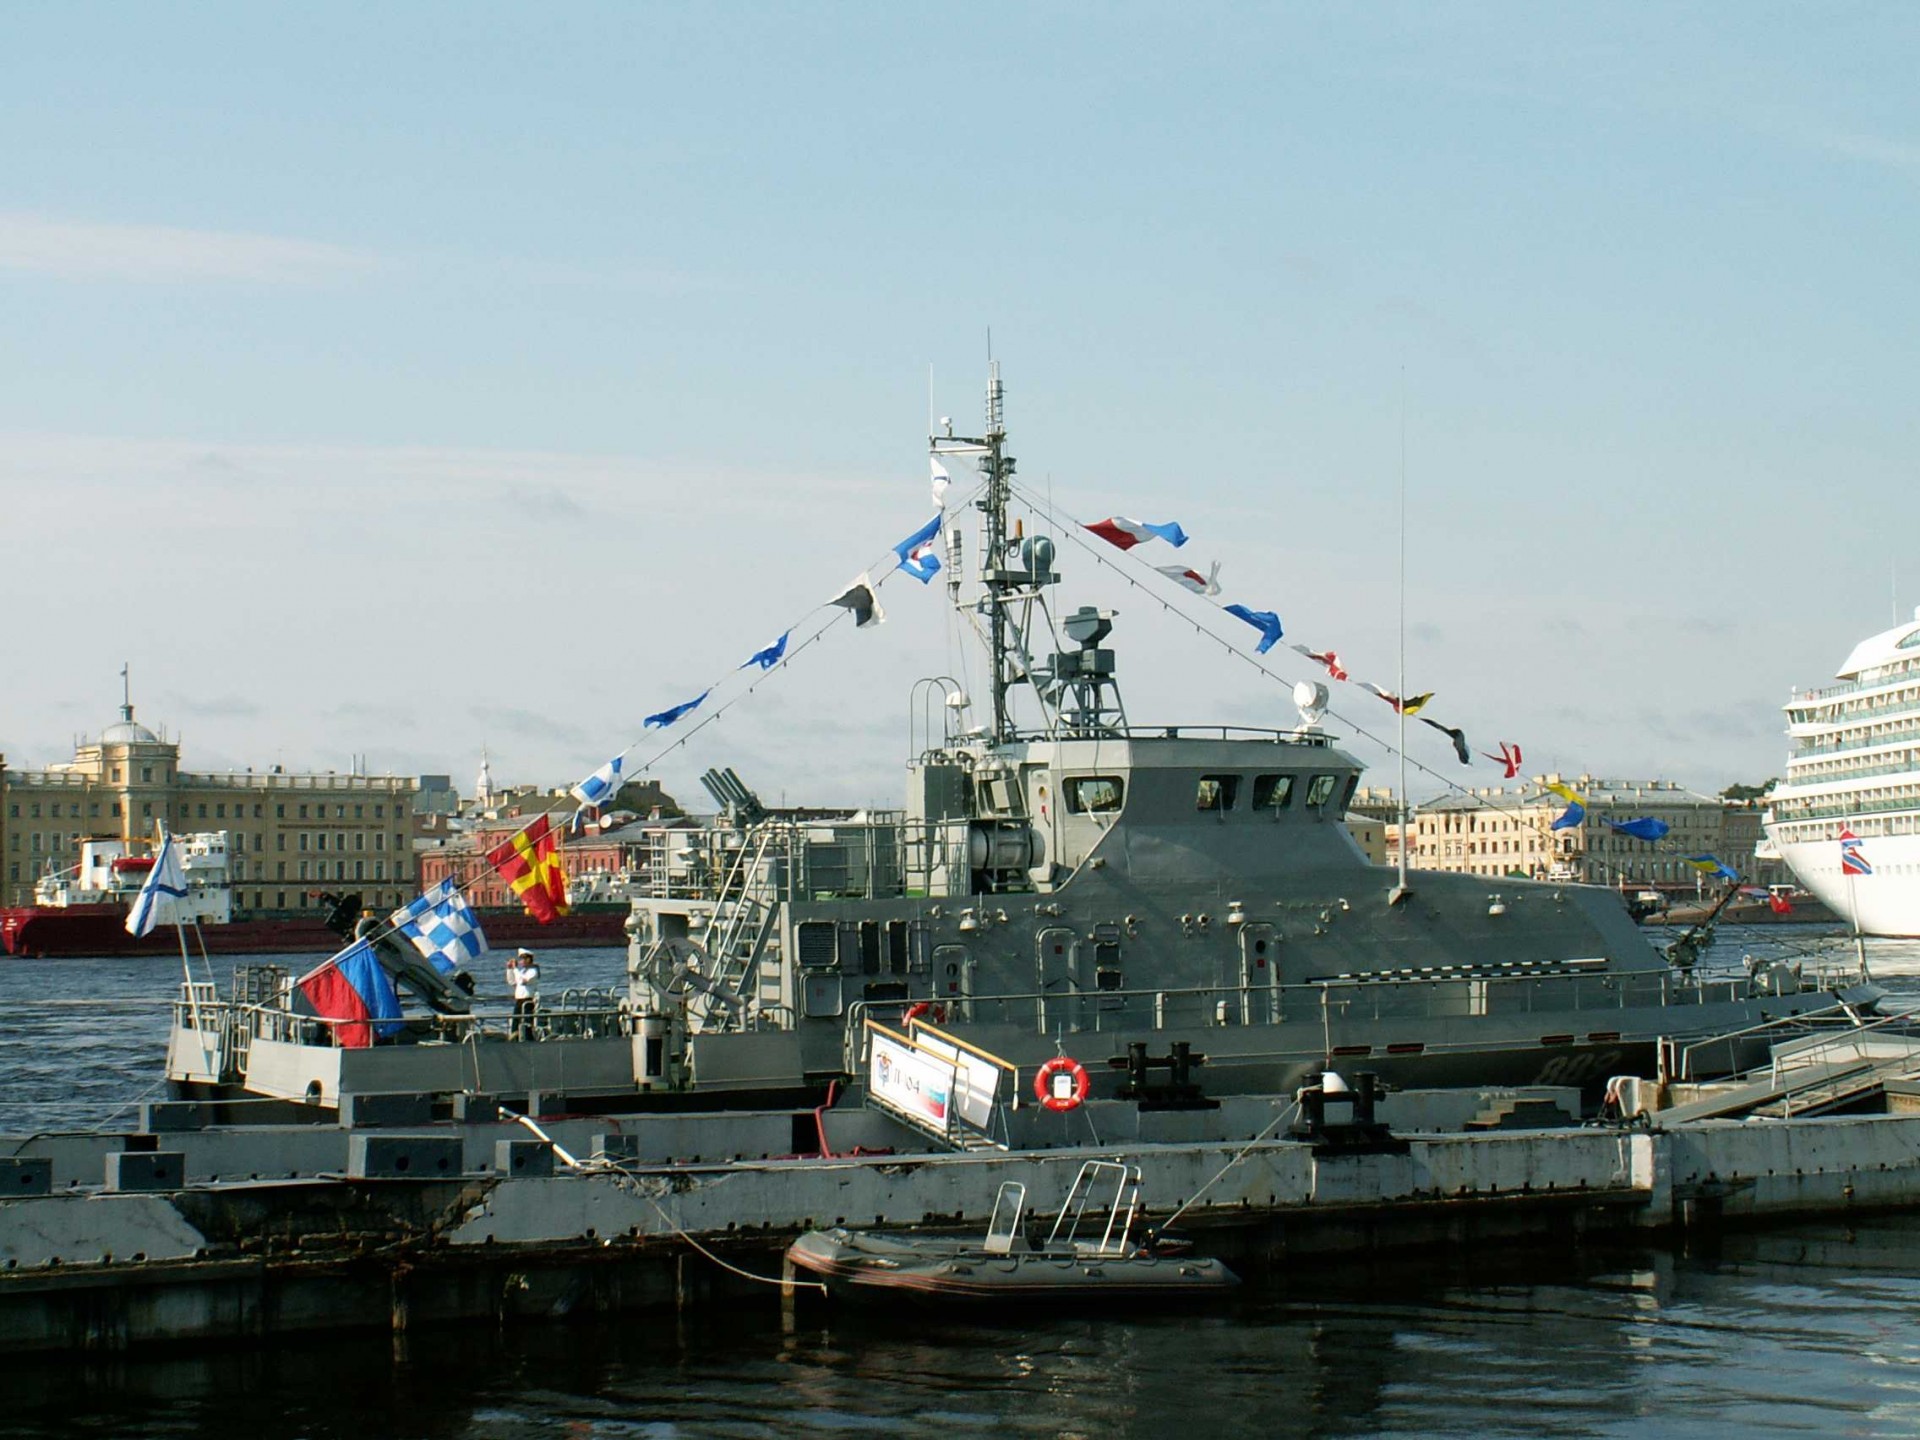 Kuter typu Graczonok w Sankt Petersburgu fot. A. Nitka